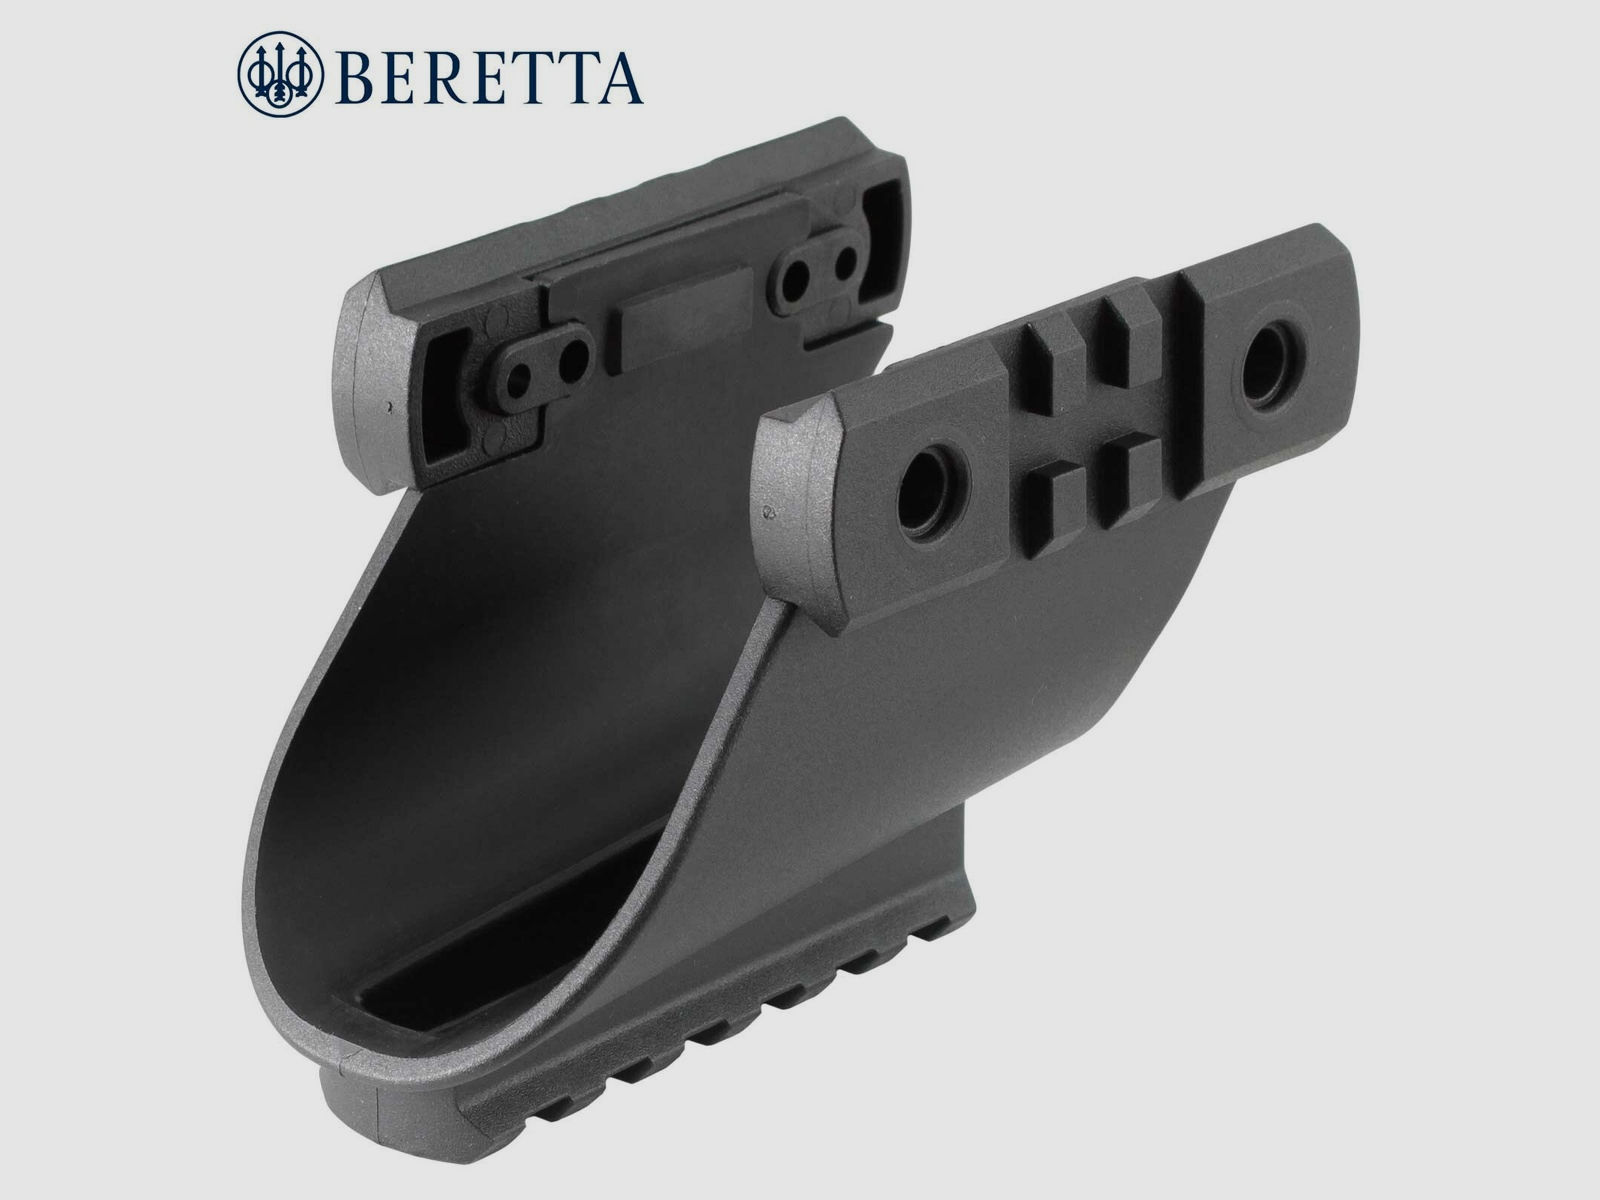 Beretta Cx4 Storm Picatinny-Schiene